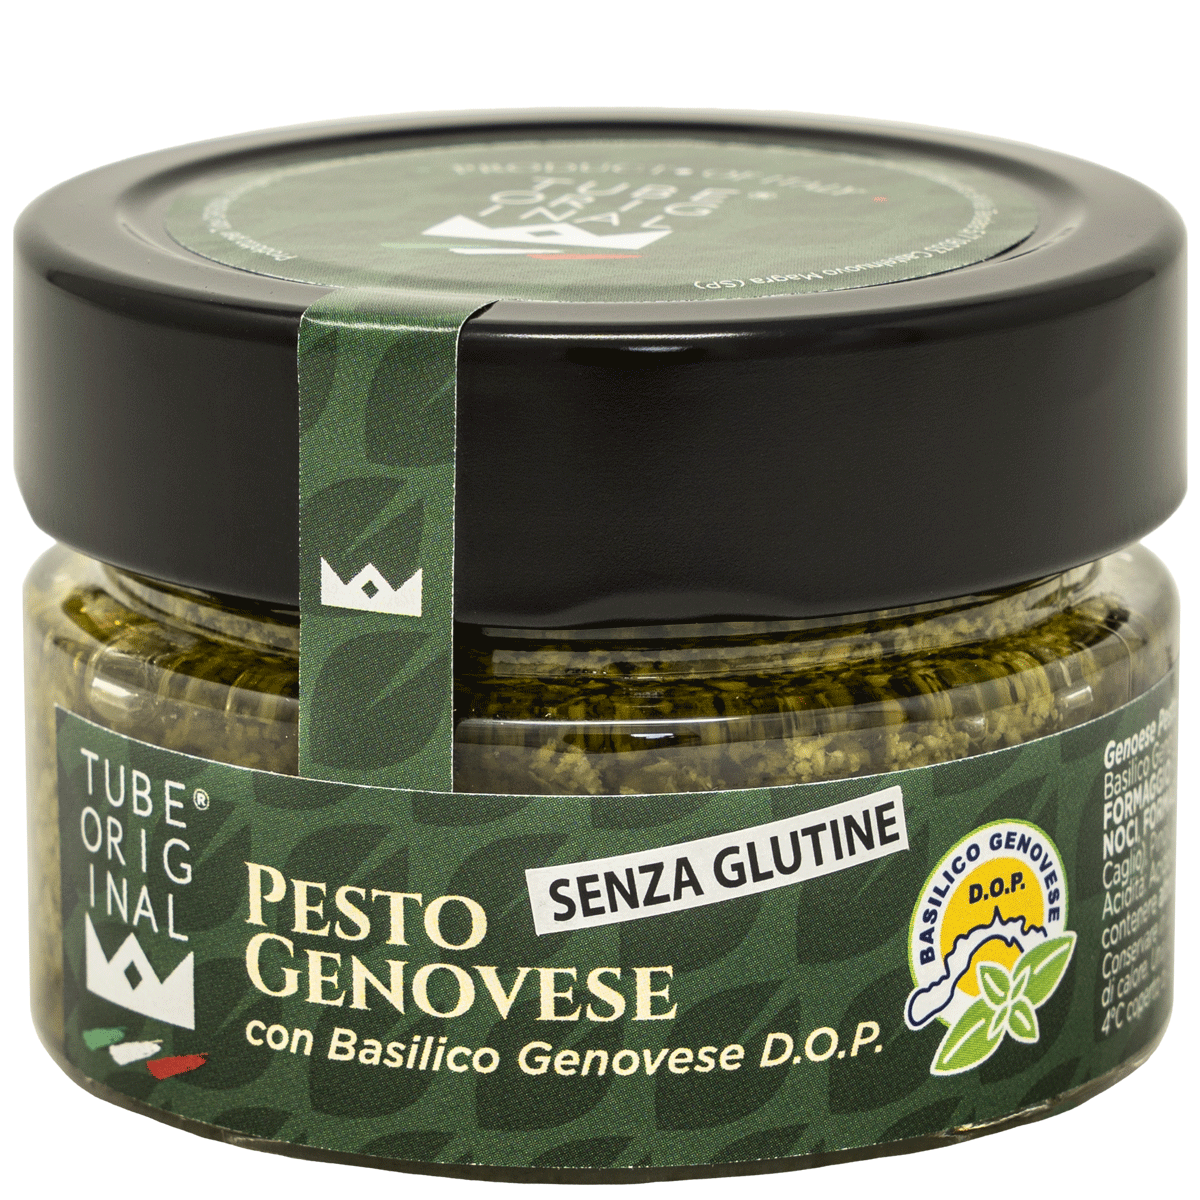 Pesto Genovese con Basilico Genovese D.O.P.